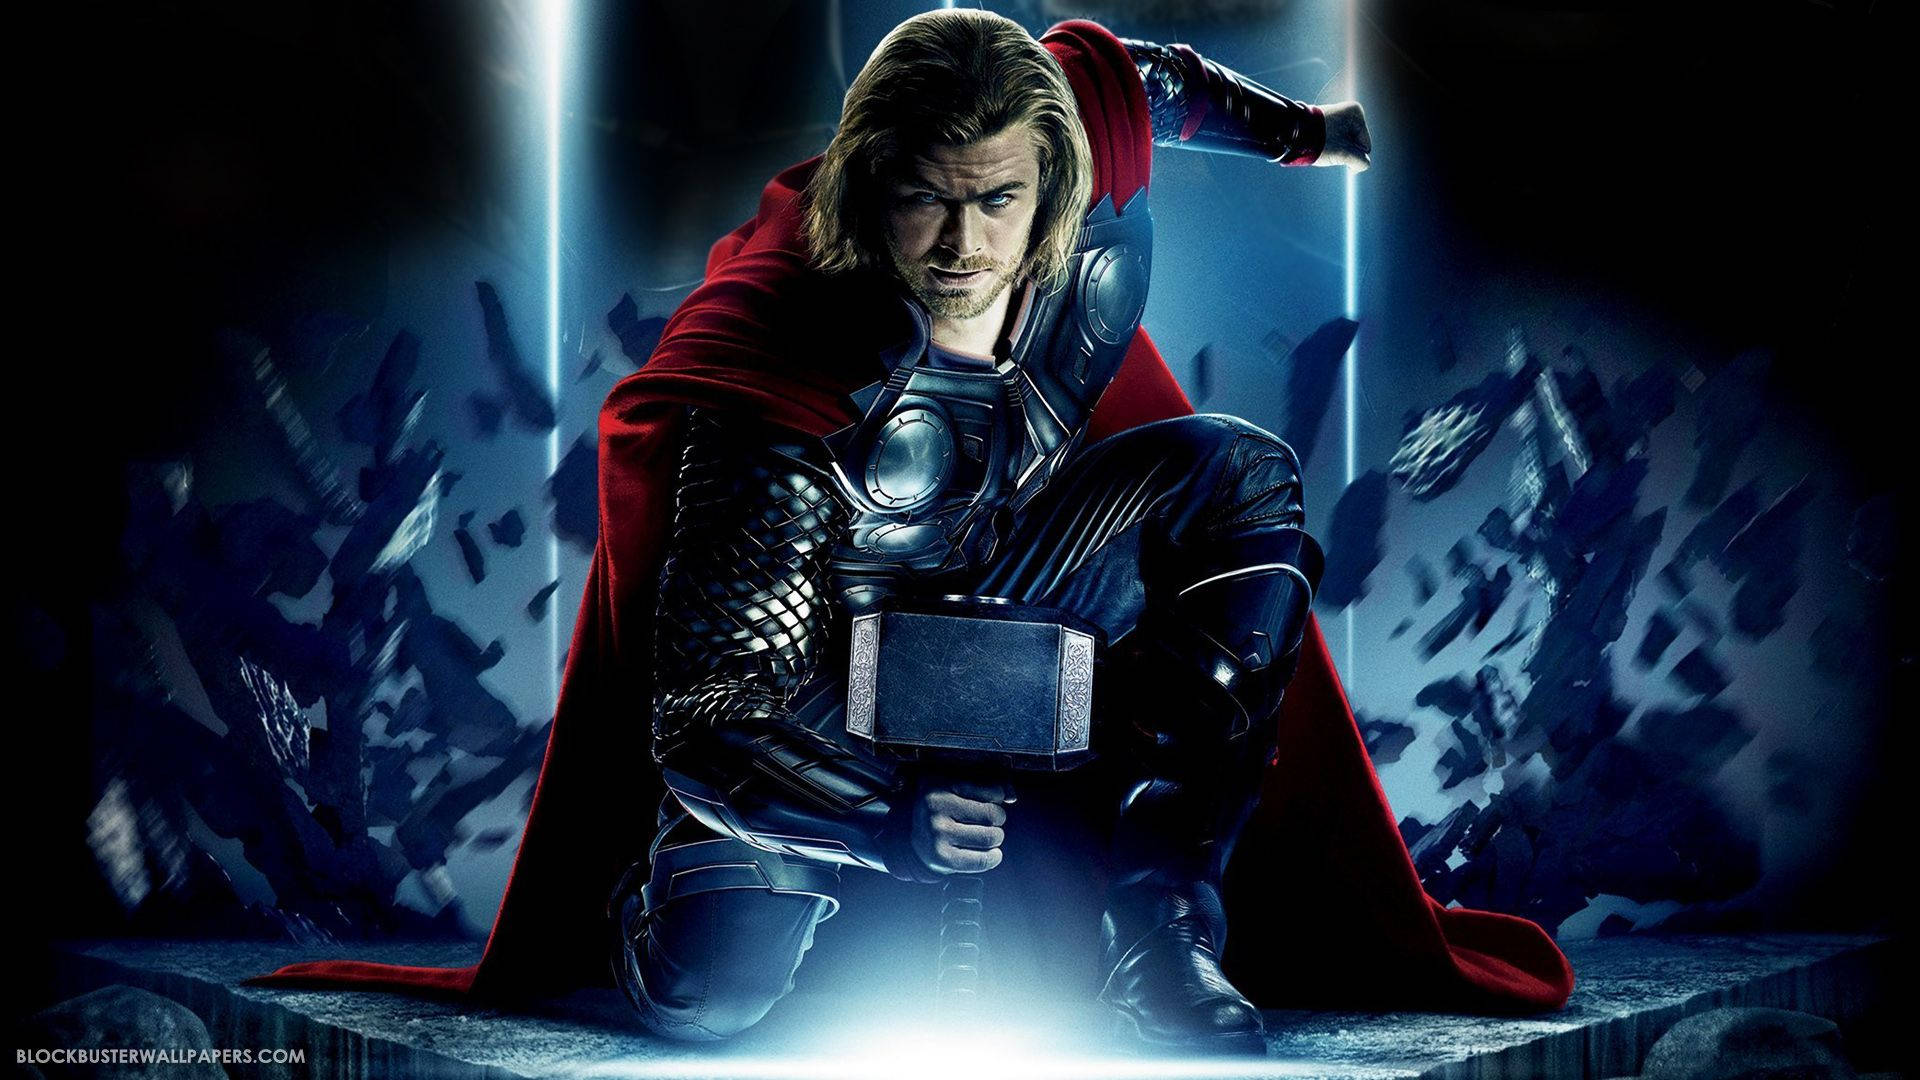 Thor kneeling before his mighty hammer Mjölnir Wallpaper